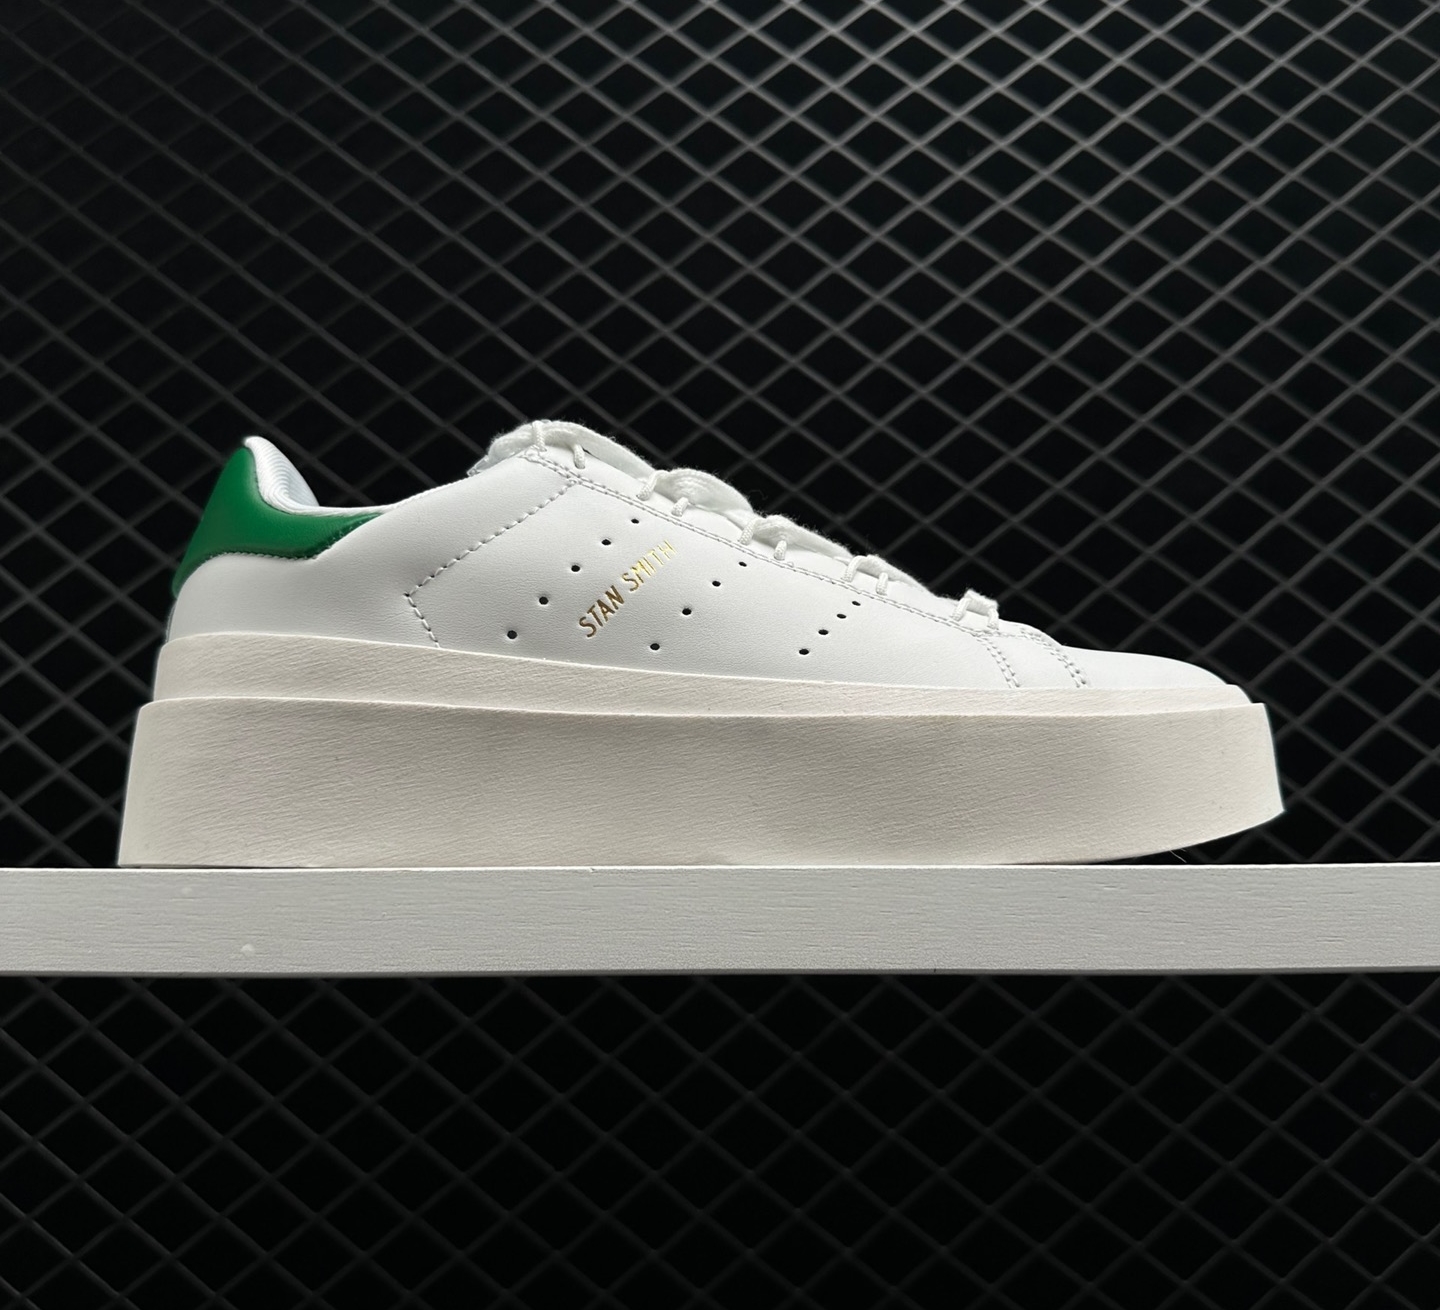 Adidas Stan Smith Bonega White Green GY9310 - Classic Style with a Twist!